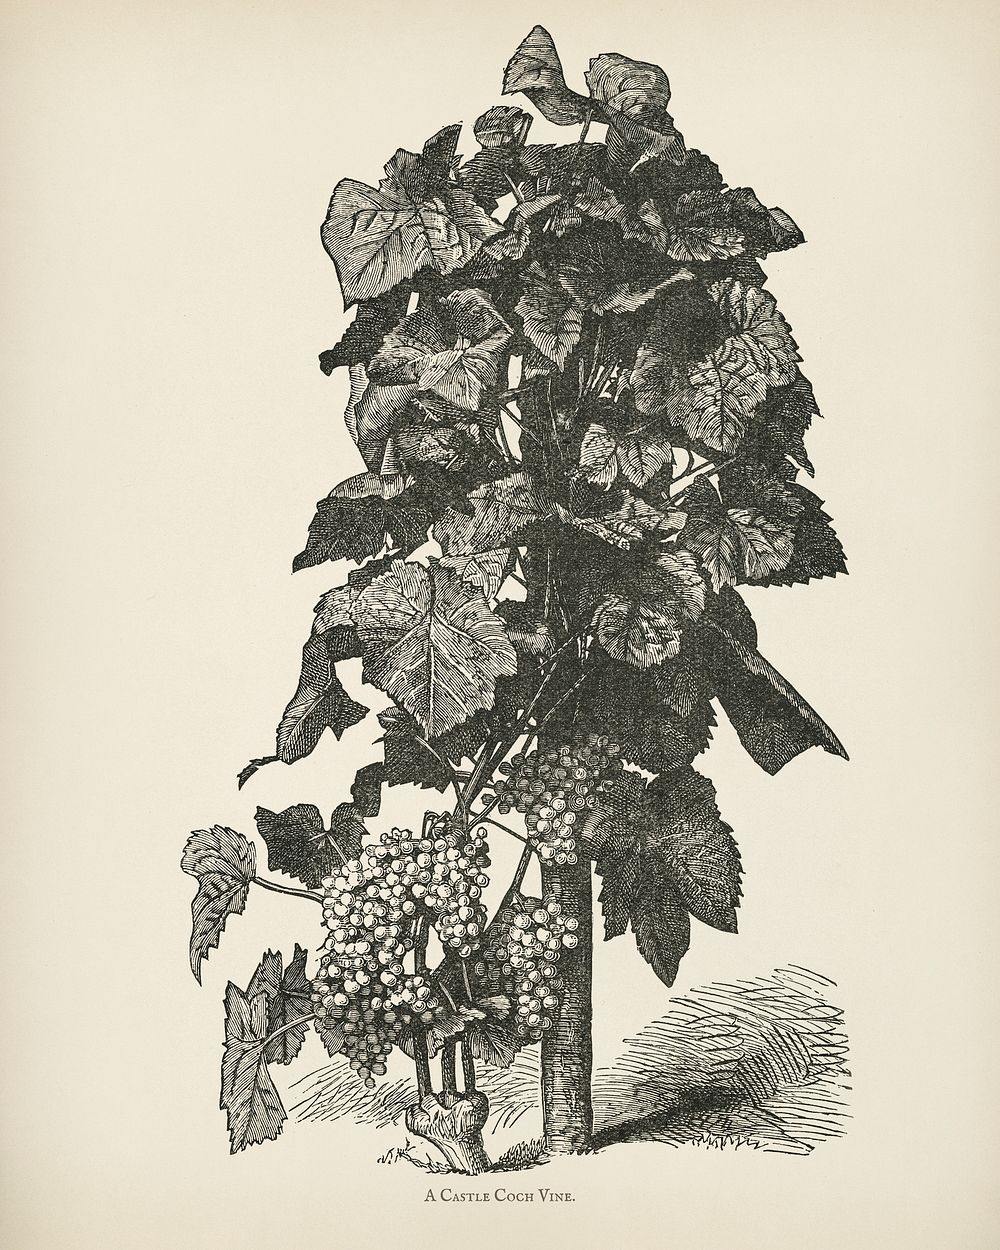 The fruit grower's guide : Vintage illustration of a castle coch vine